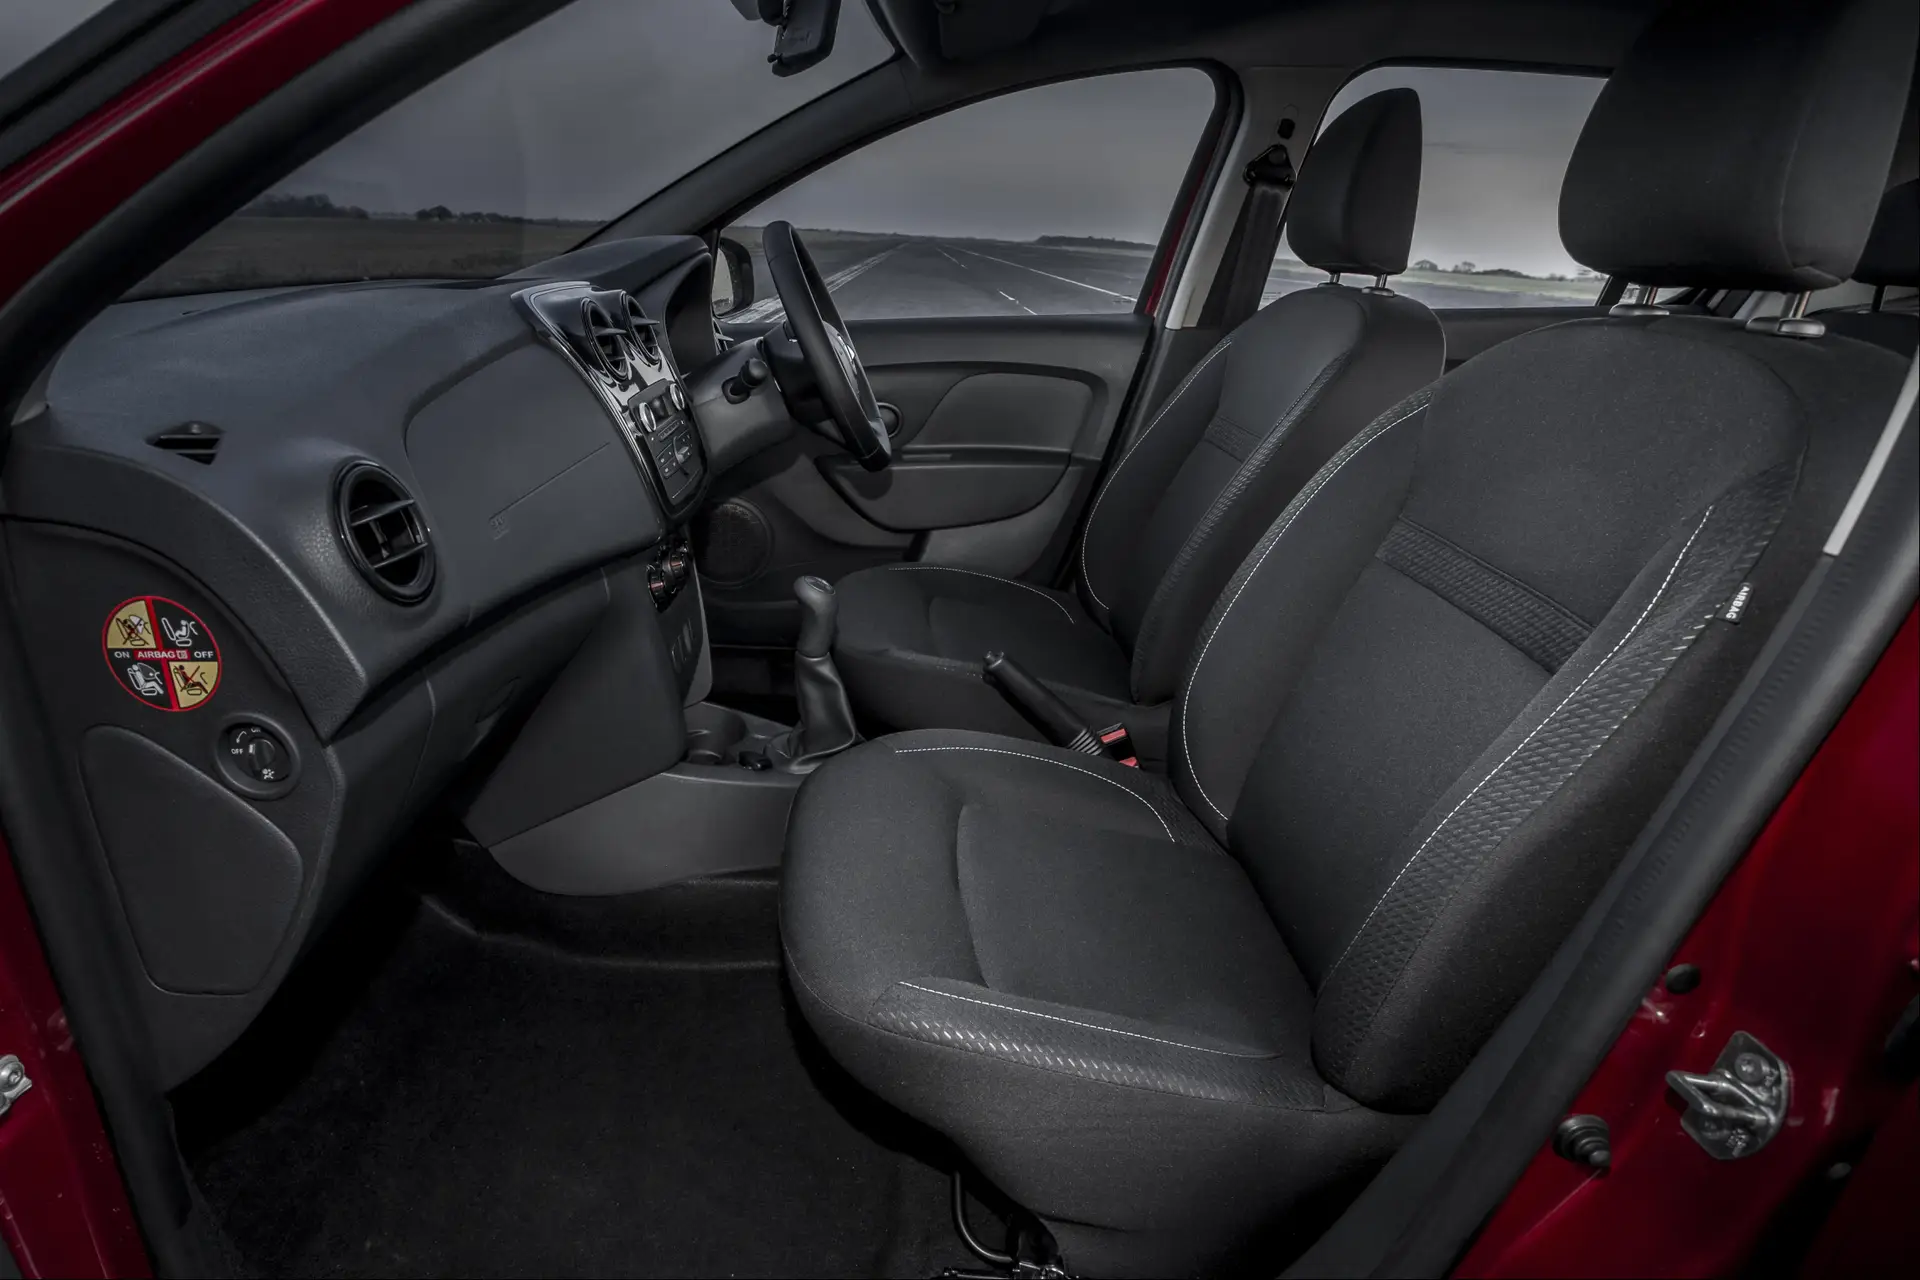 Dacia Sandero (2013-2021) Review: interior close up photo of the Dacia Sandero front seats